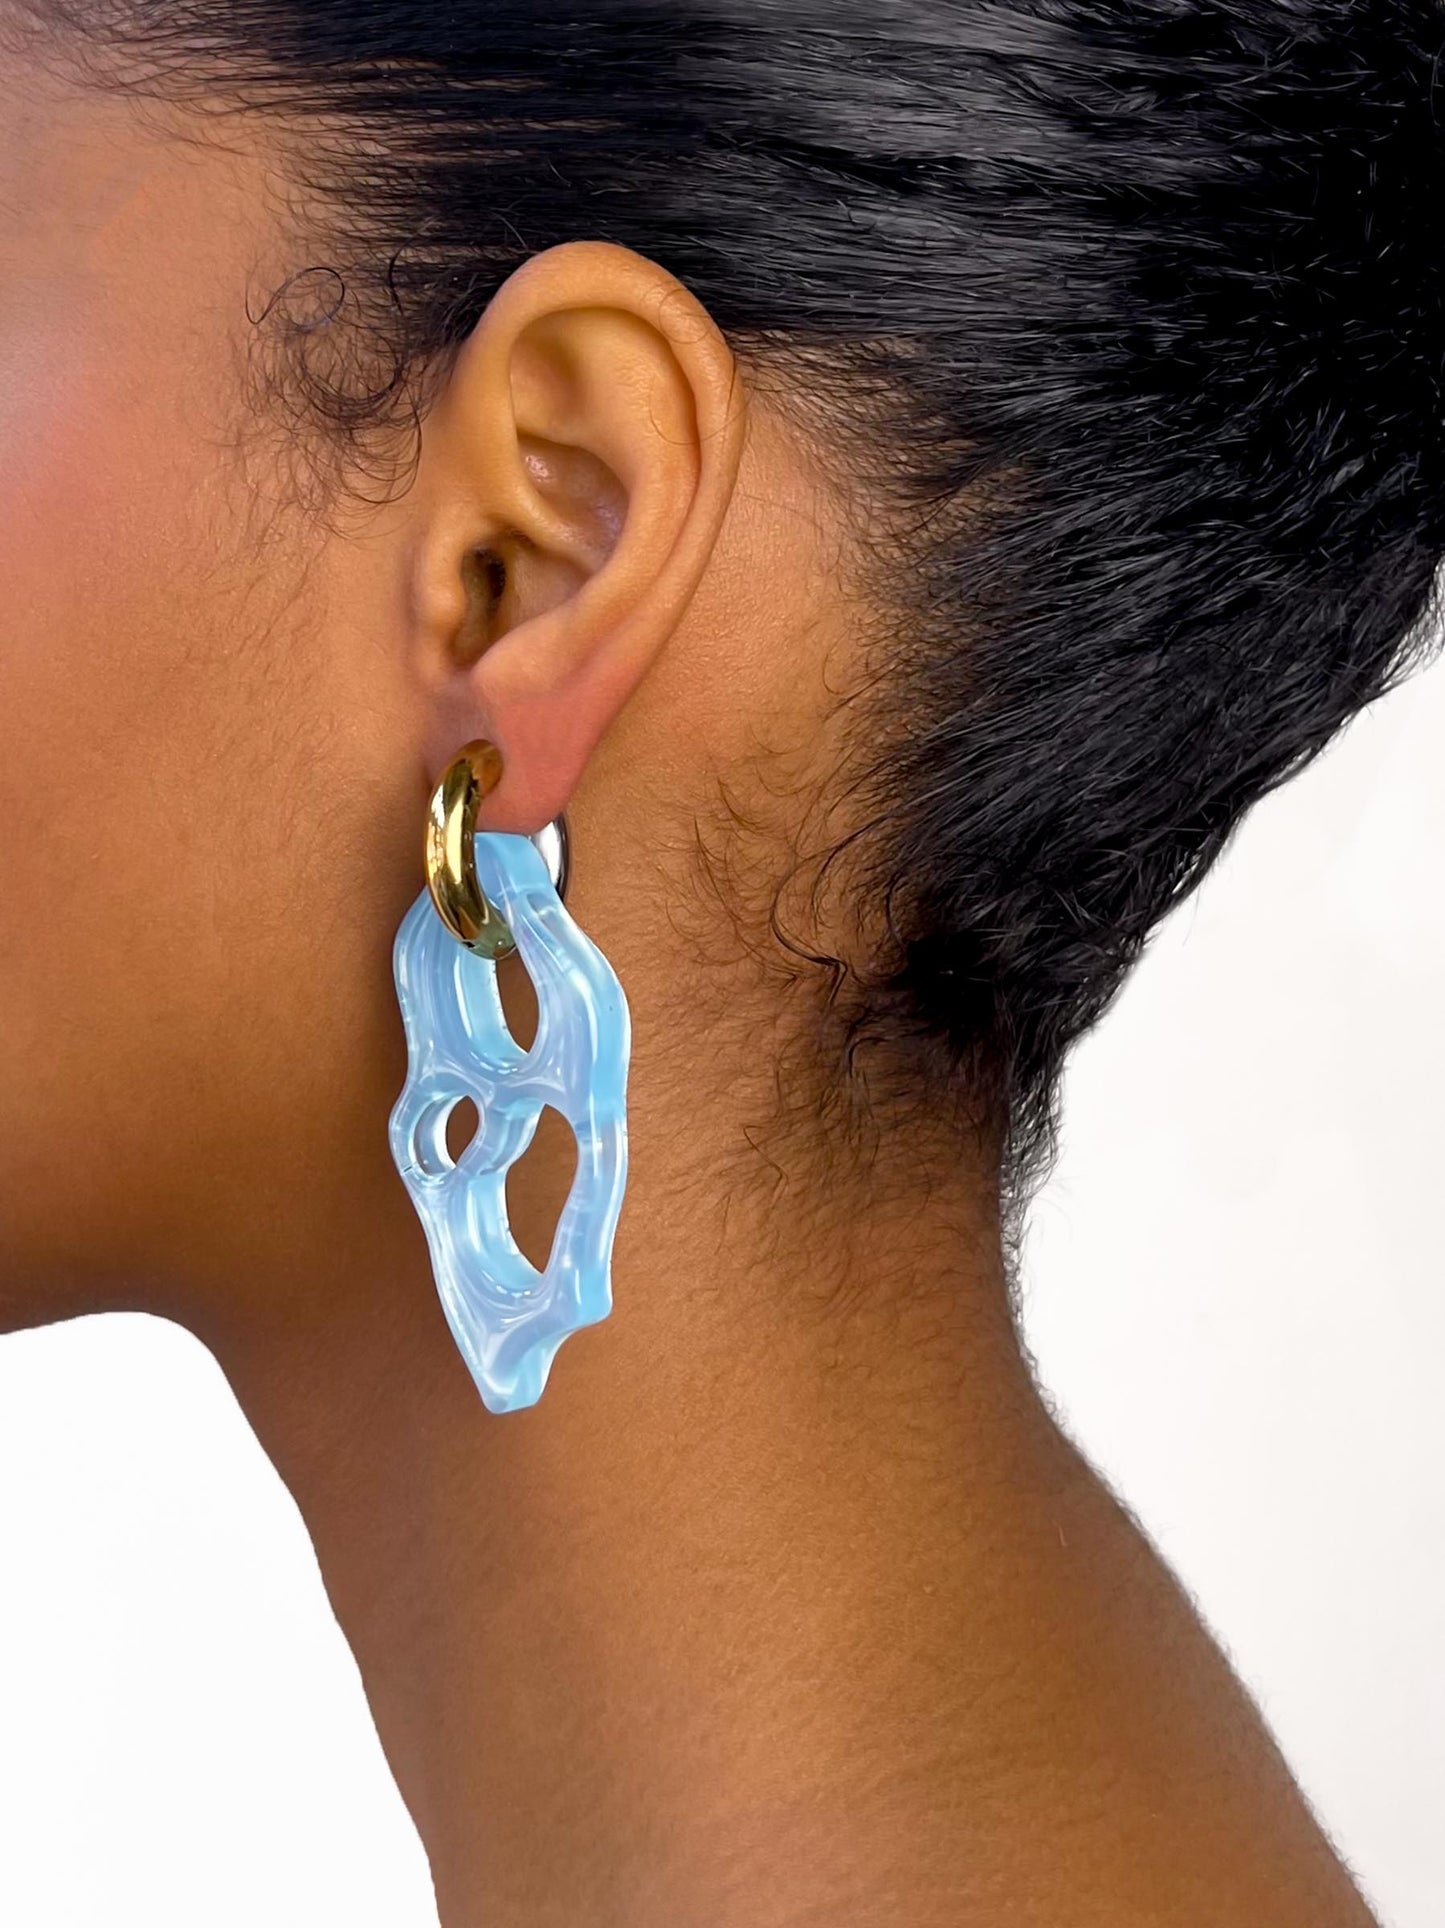 Ami Ora glass blue duo earring (pair)